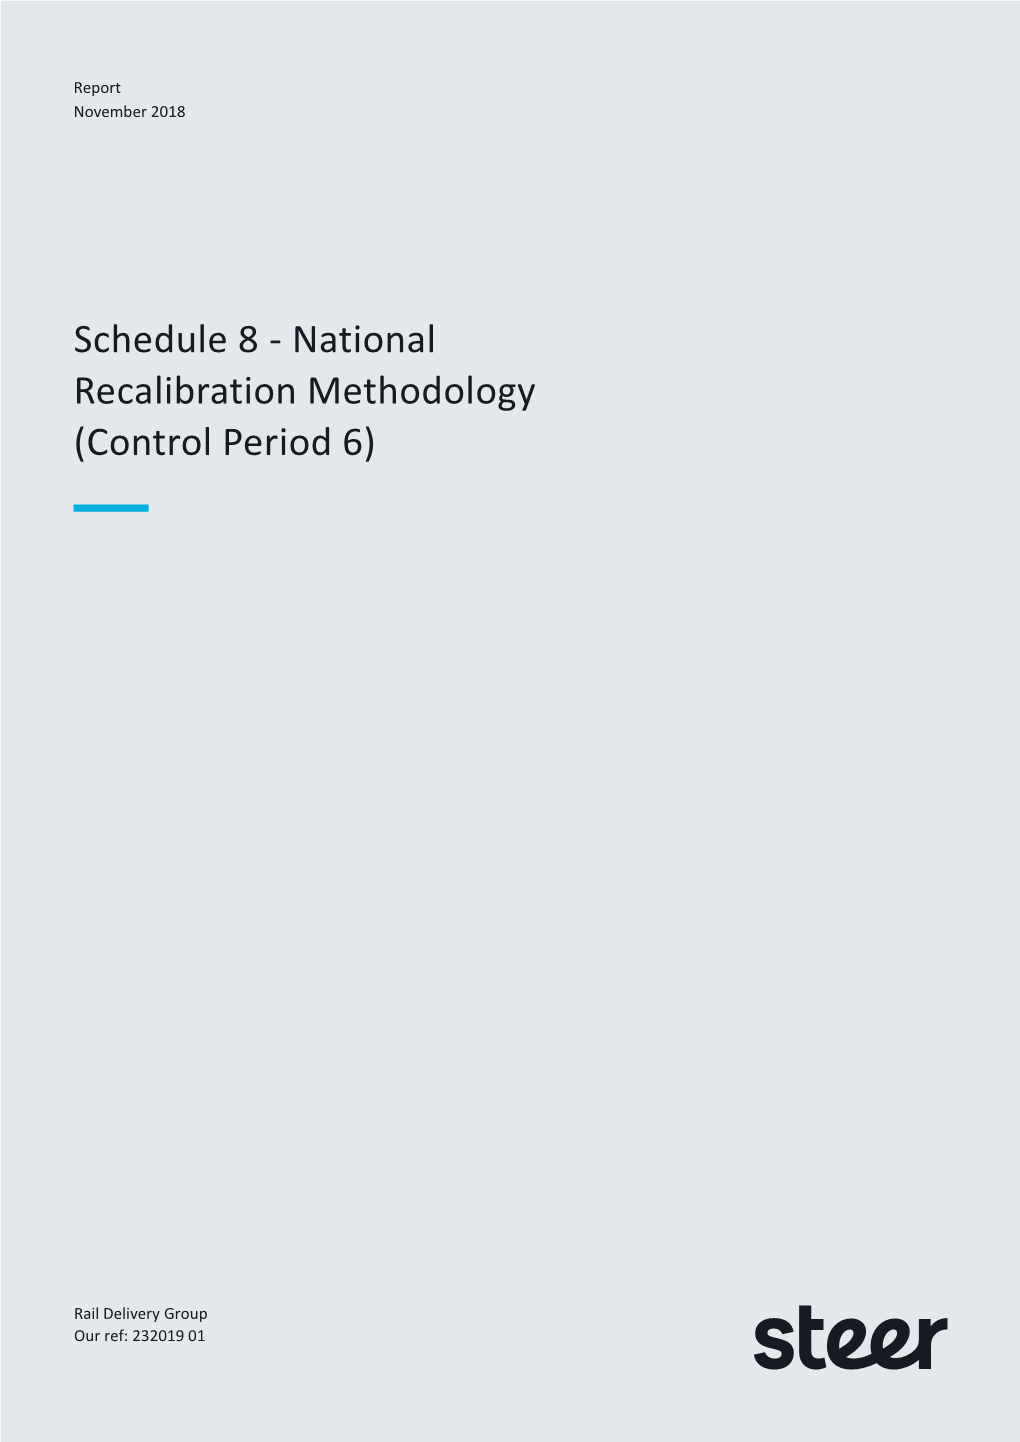 Schedule 8 - National Recalibration Methodology (Control Period 6)